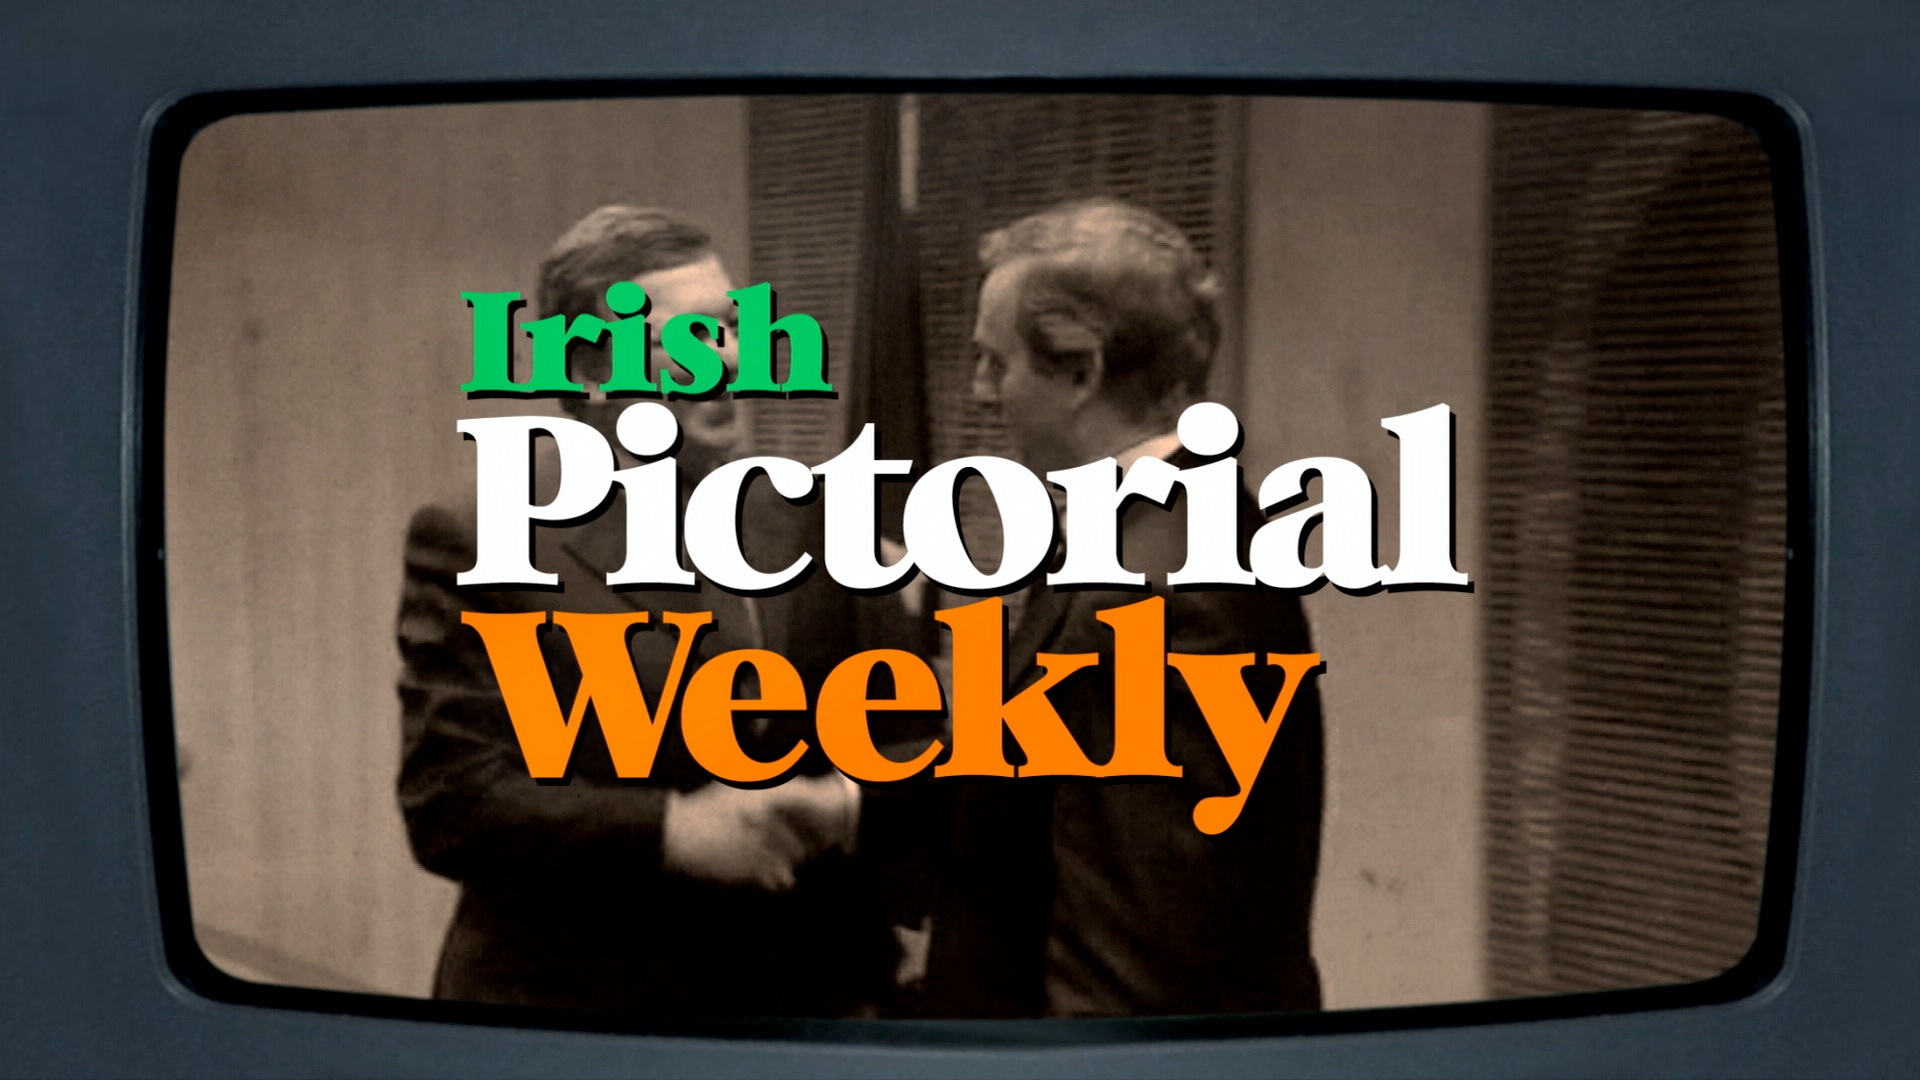 Irish Pictorial Weekly